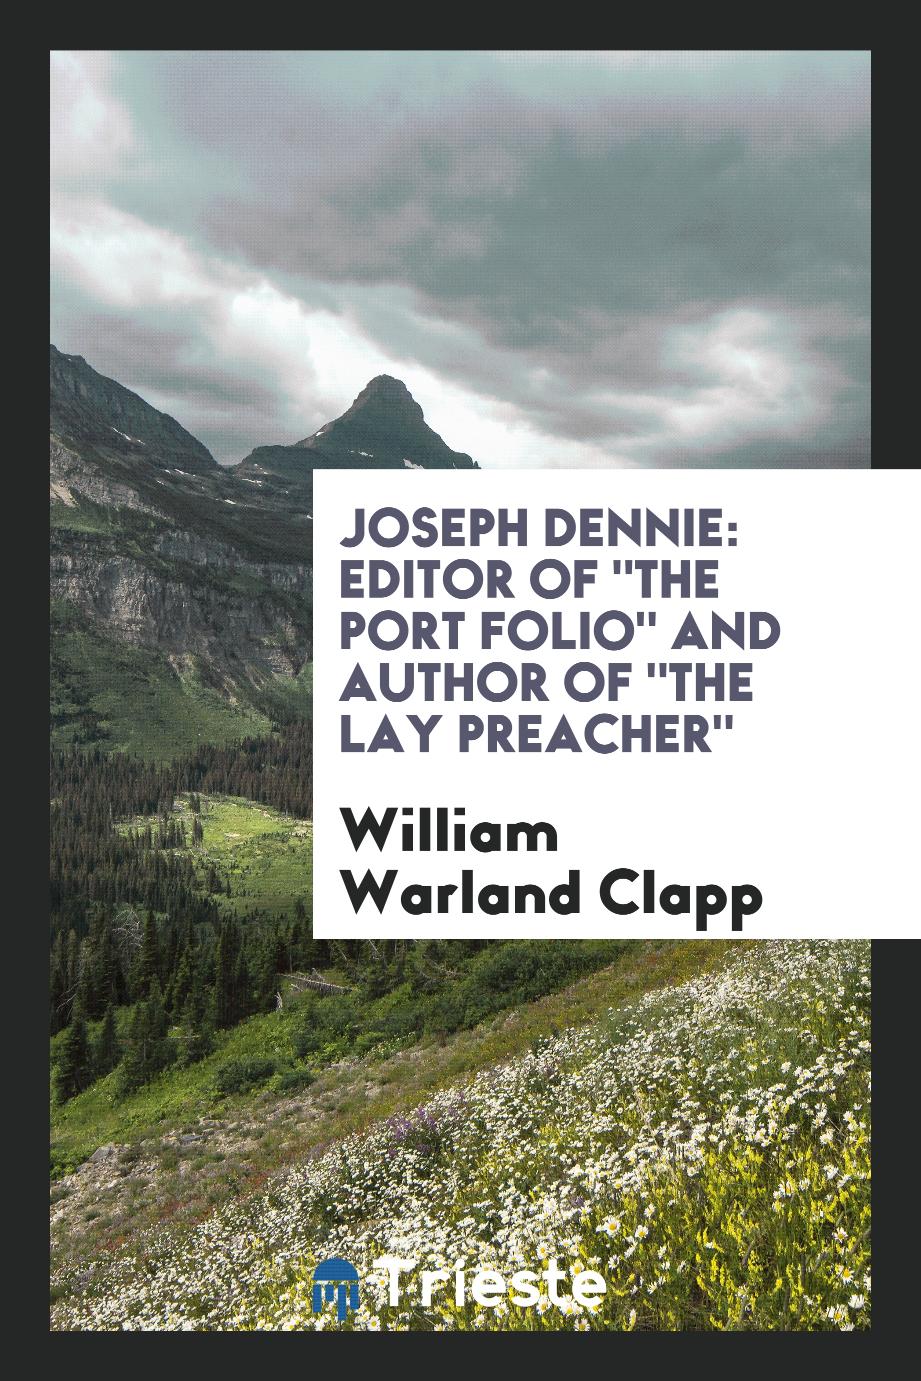 Joseph Dennie: Editor of "The Port Folio" and Author of "The Lay Preacher"